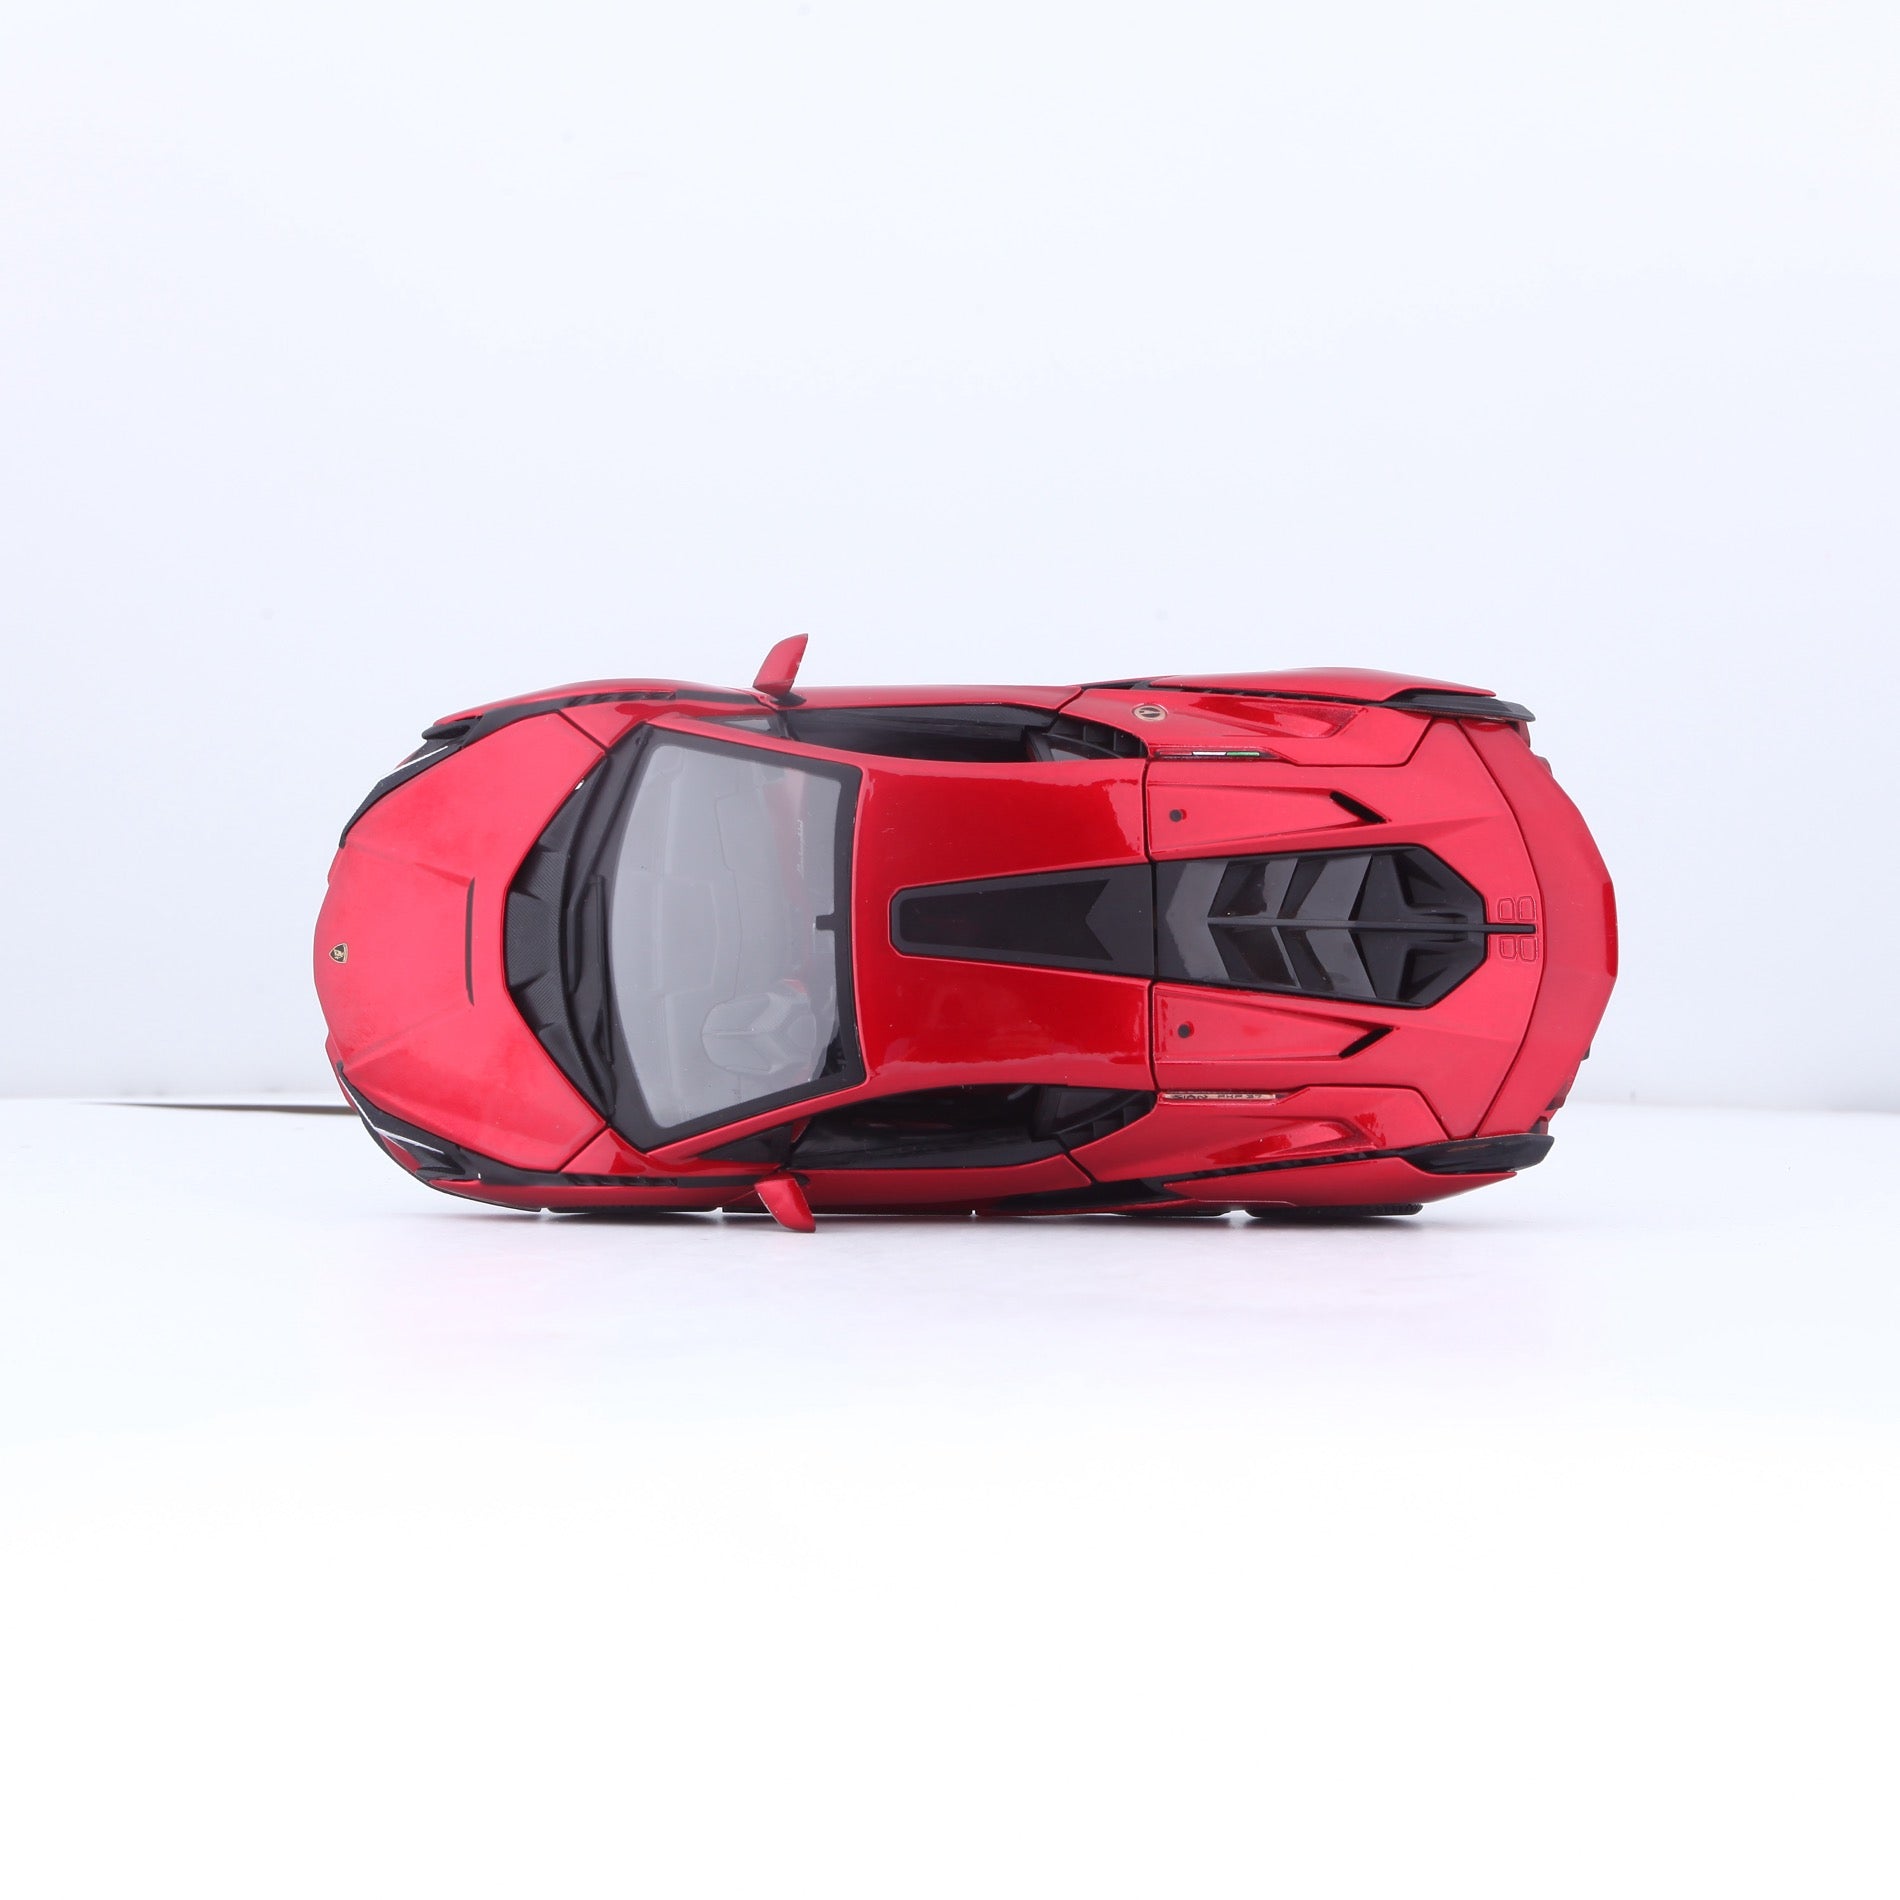 18-21099 RD - Bburago - 1:24 - Lamborghini Sin FKP 37 - Rossa